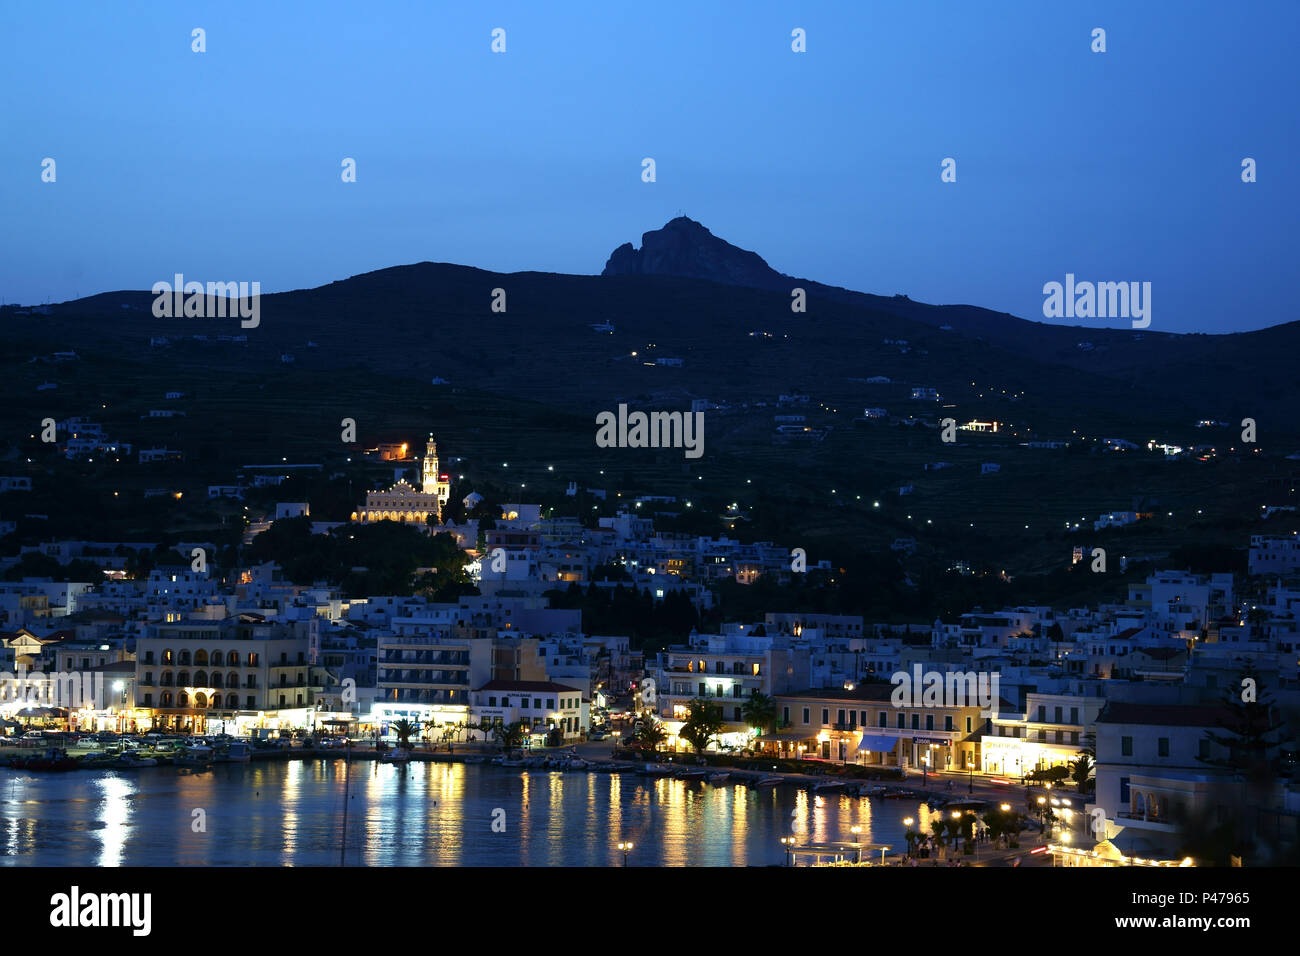 Town Tinos at night with mountain Exombourgo, island Tinos, Cyclades, Greece Stock Photo